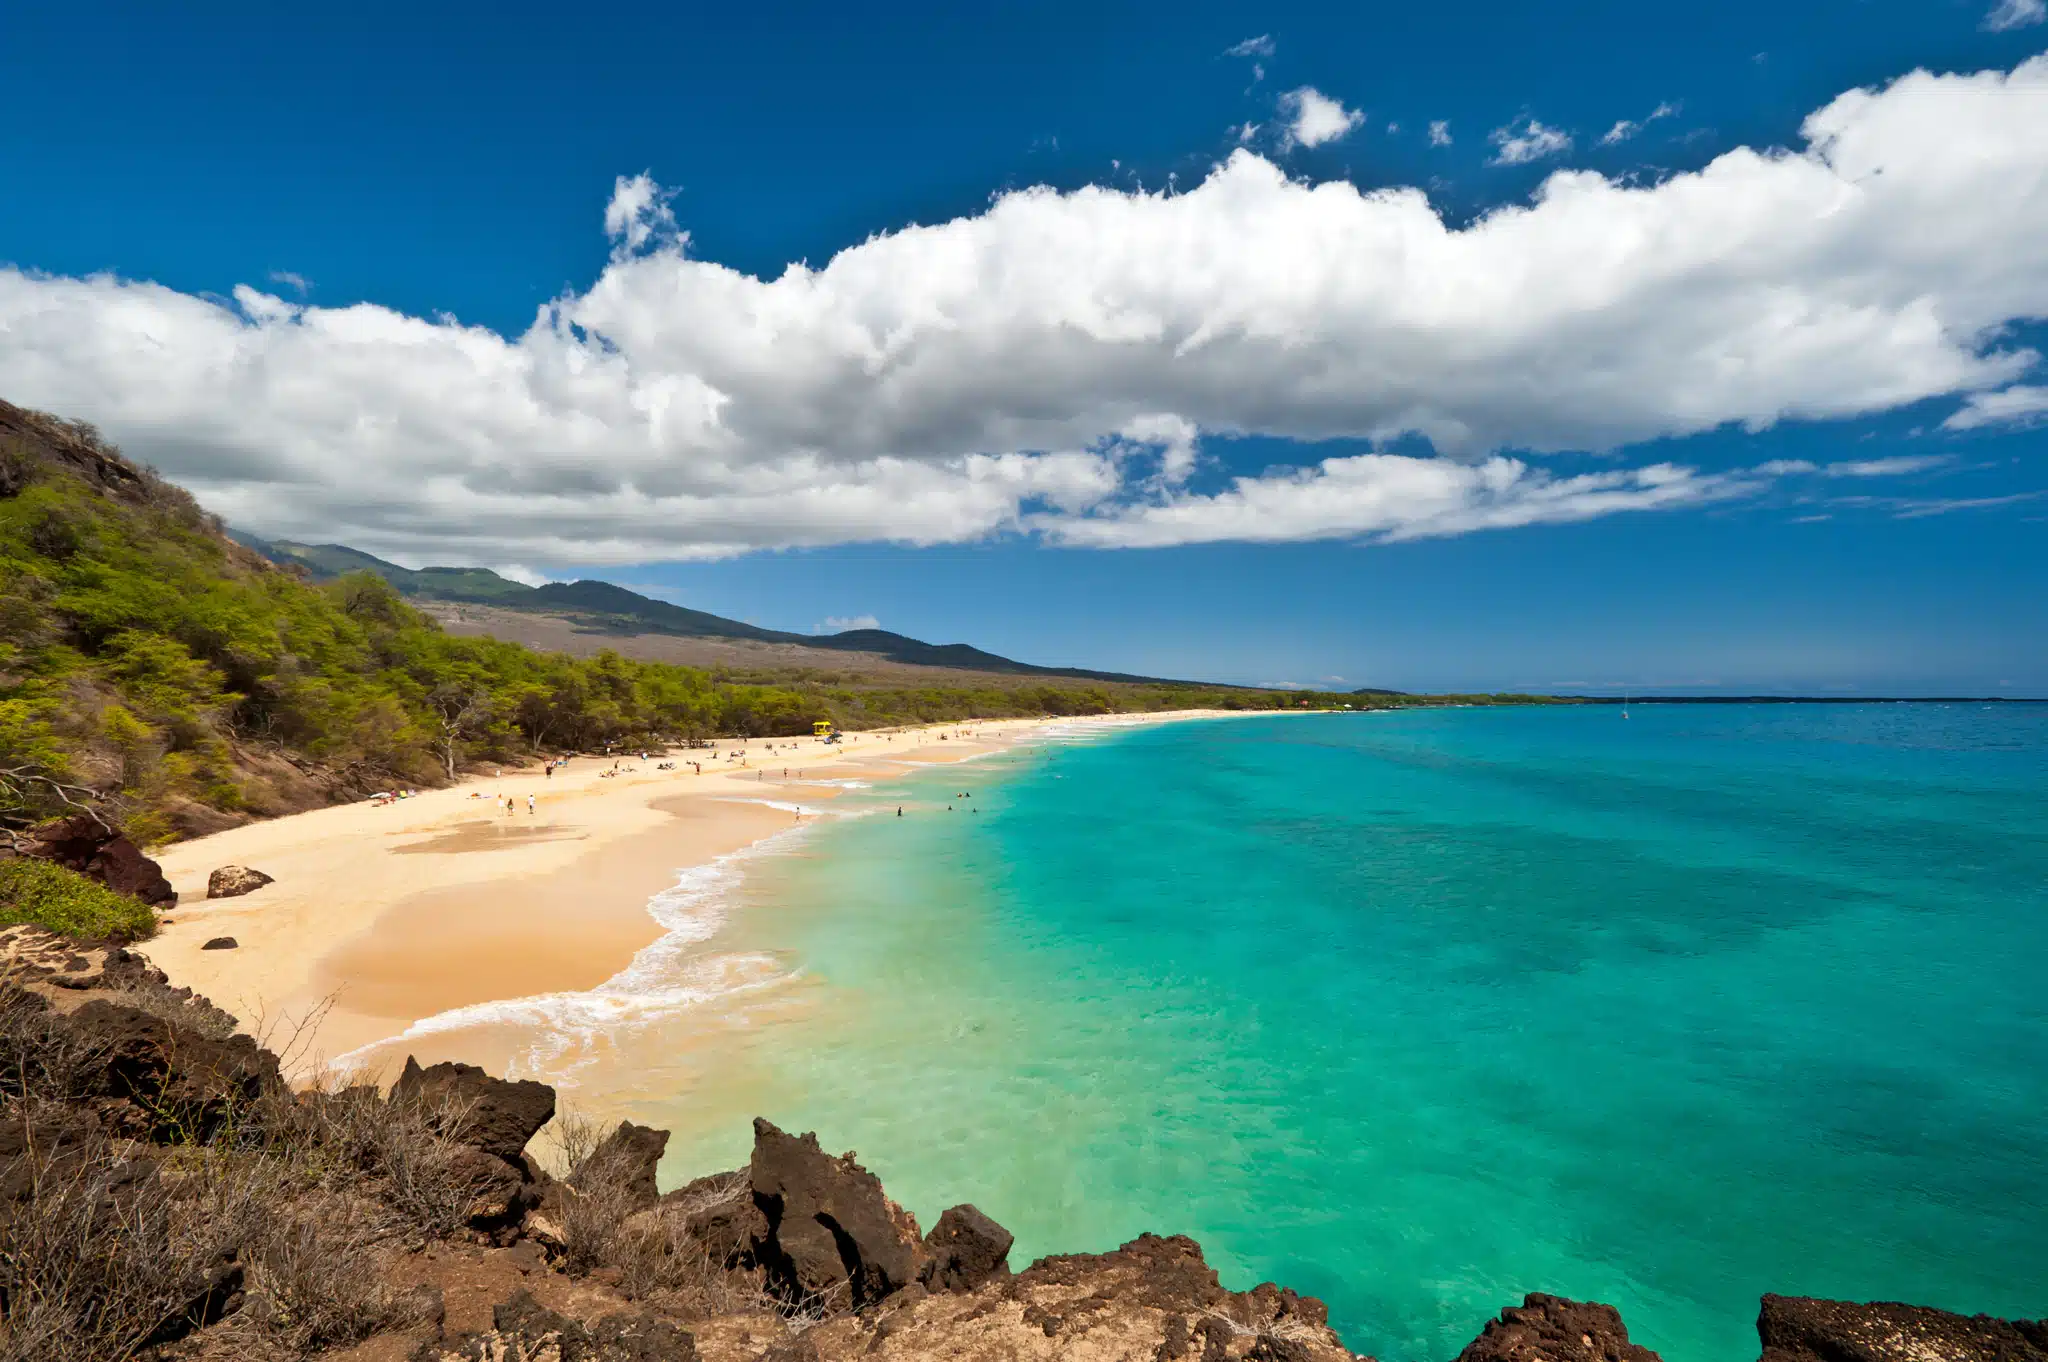 Makena Beach is a Beach located in the city of Kihei on Maui, Hawaii